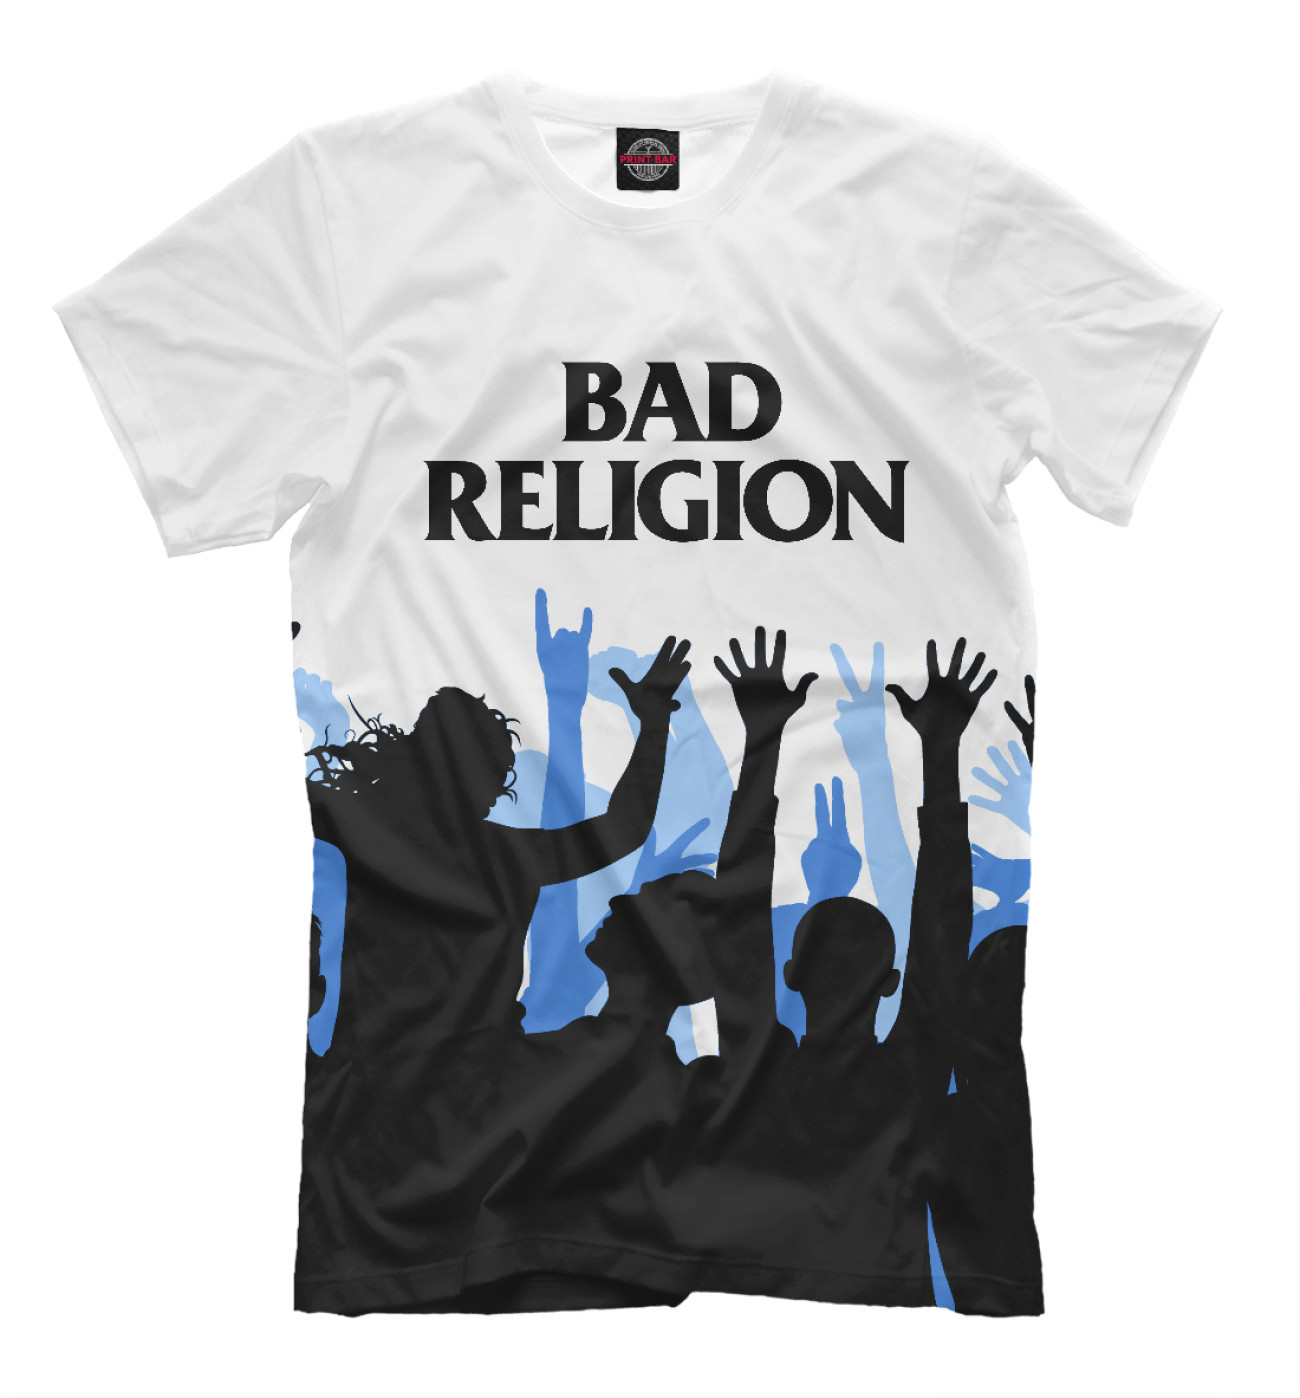 Мужская Футболка Bad Religion, артикул: BRL-628357-fut-2